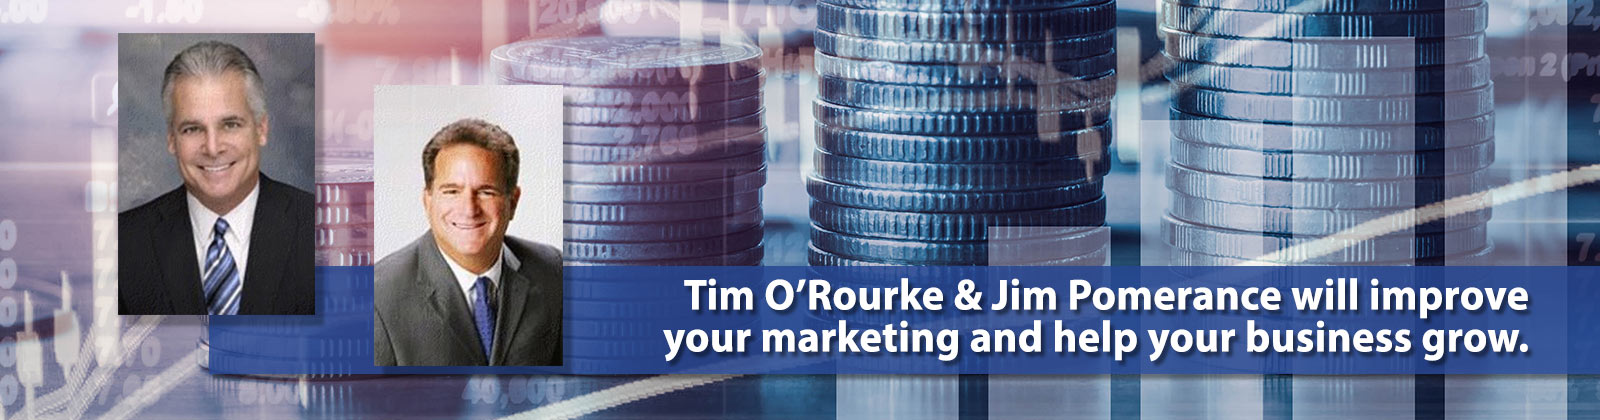 Let Tim O'Rouke & Jim Pomerance make your business grow.